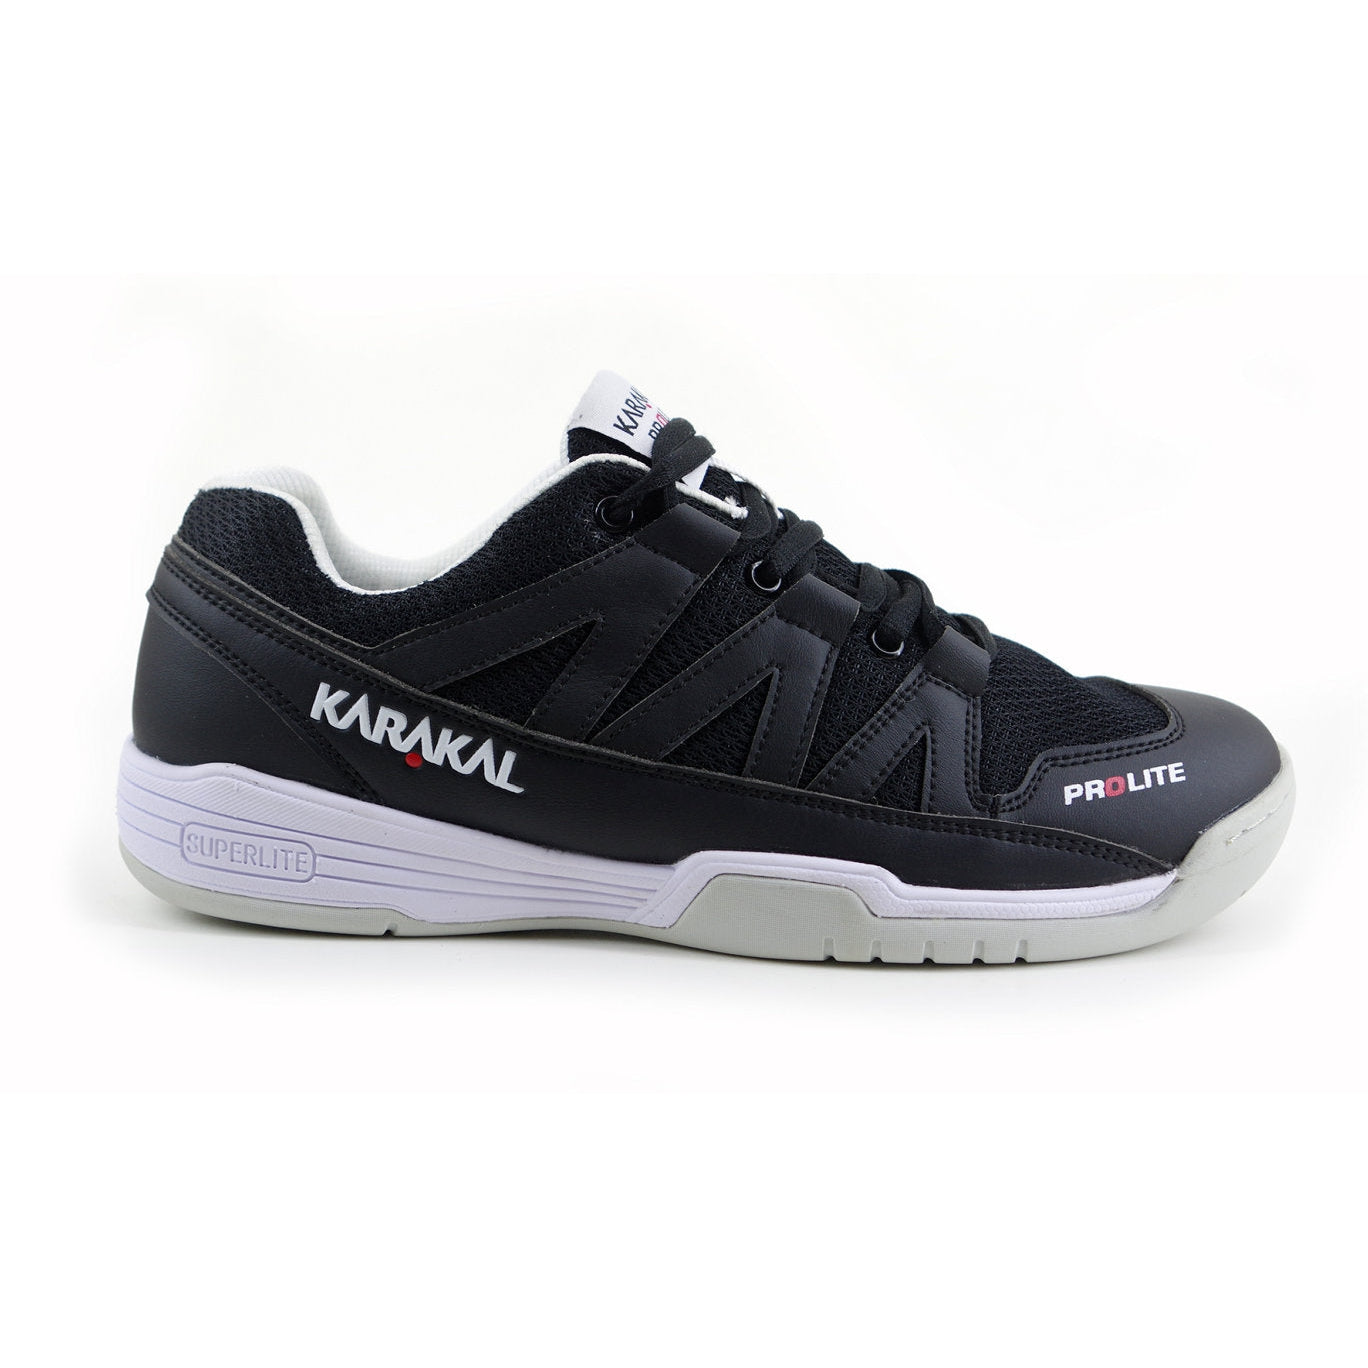 Karakal (Kf950) Prolite Court Shoe - Size 45